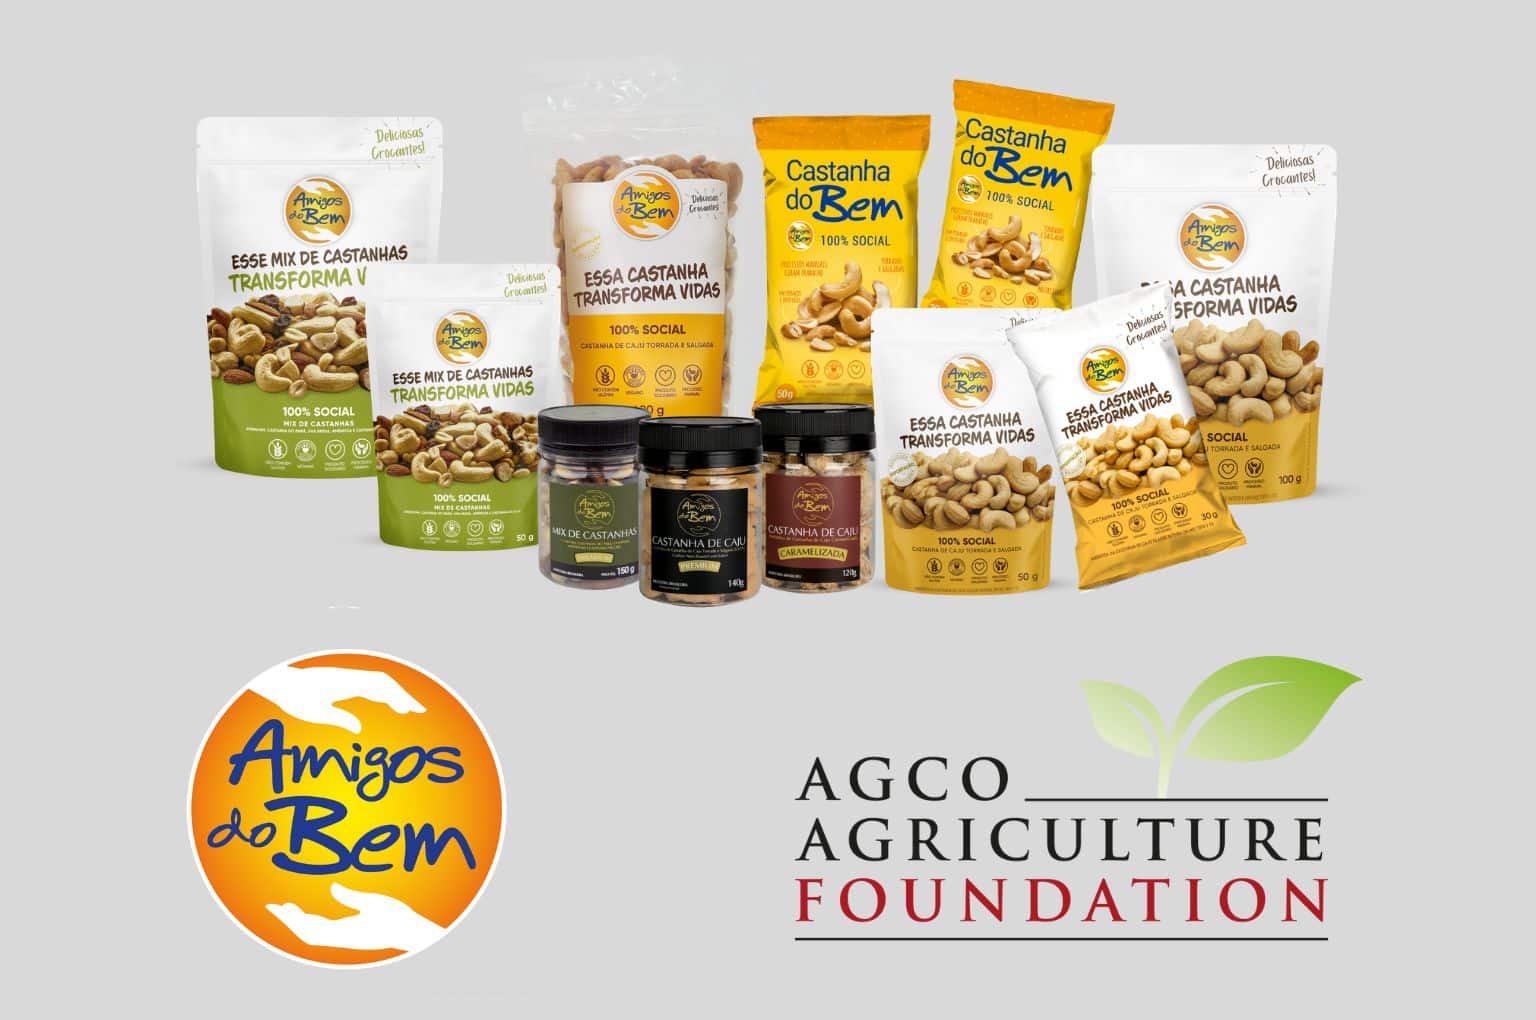 AGCO Agriculture Foundation donates to Amigos do Bem in Brazil